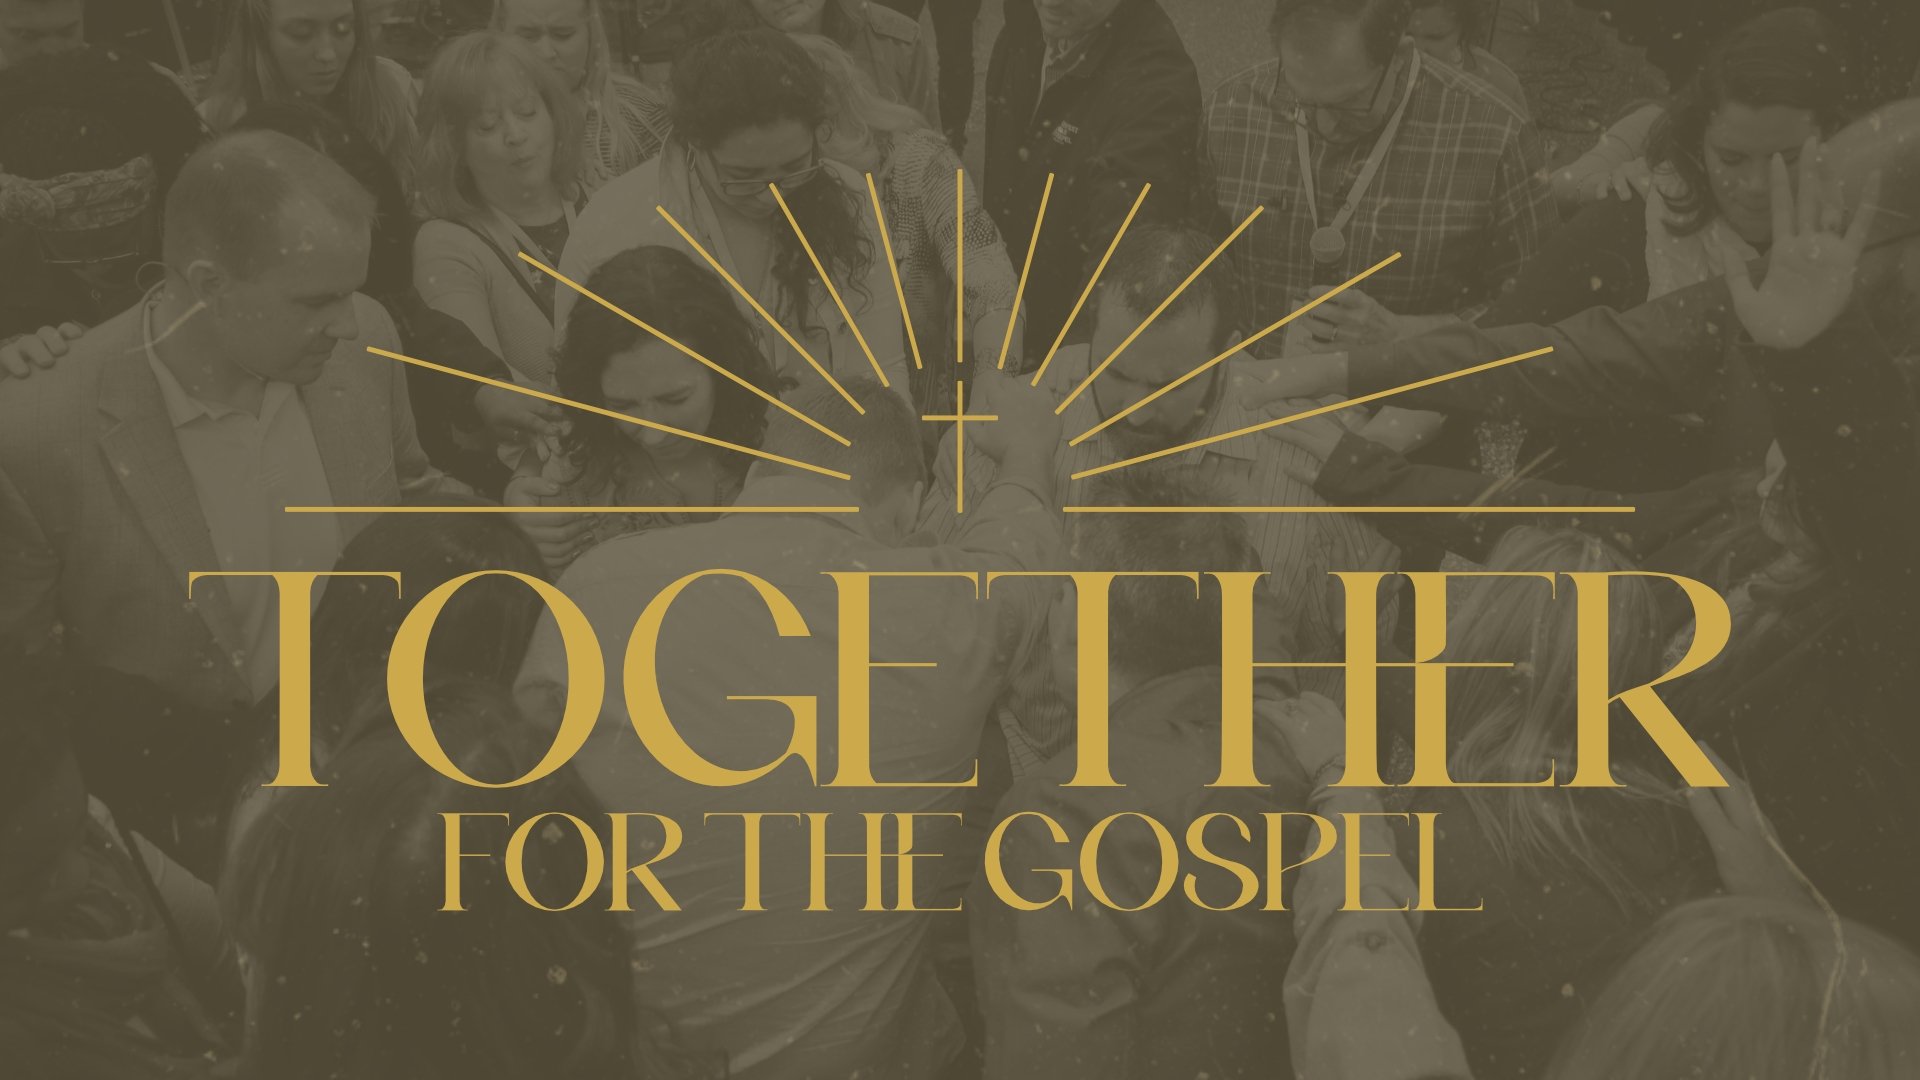 Together For The Gospel